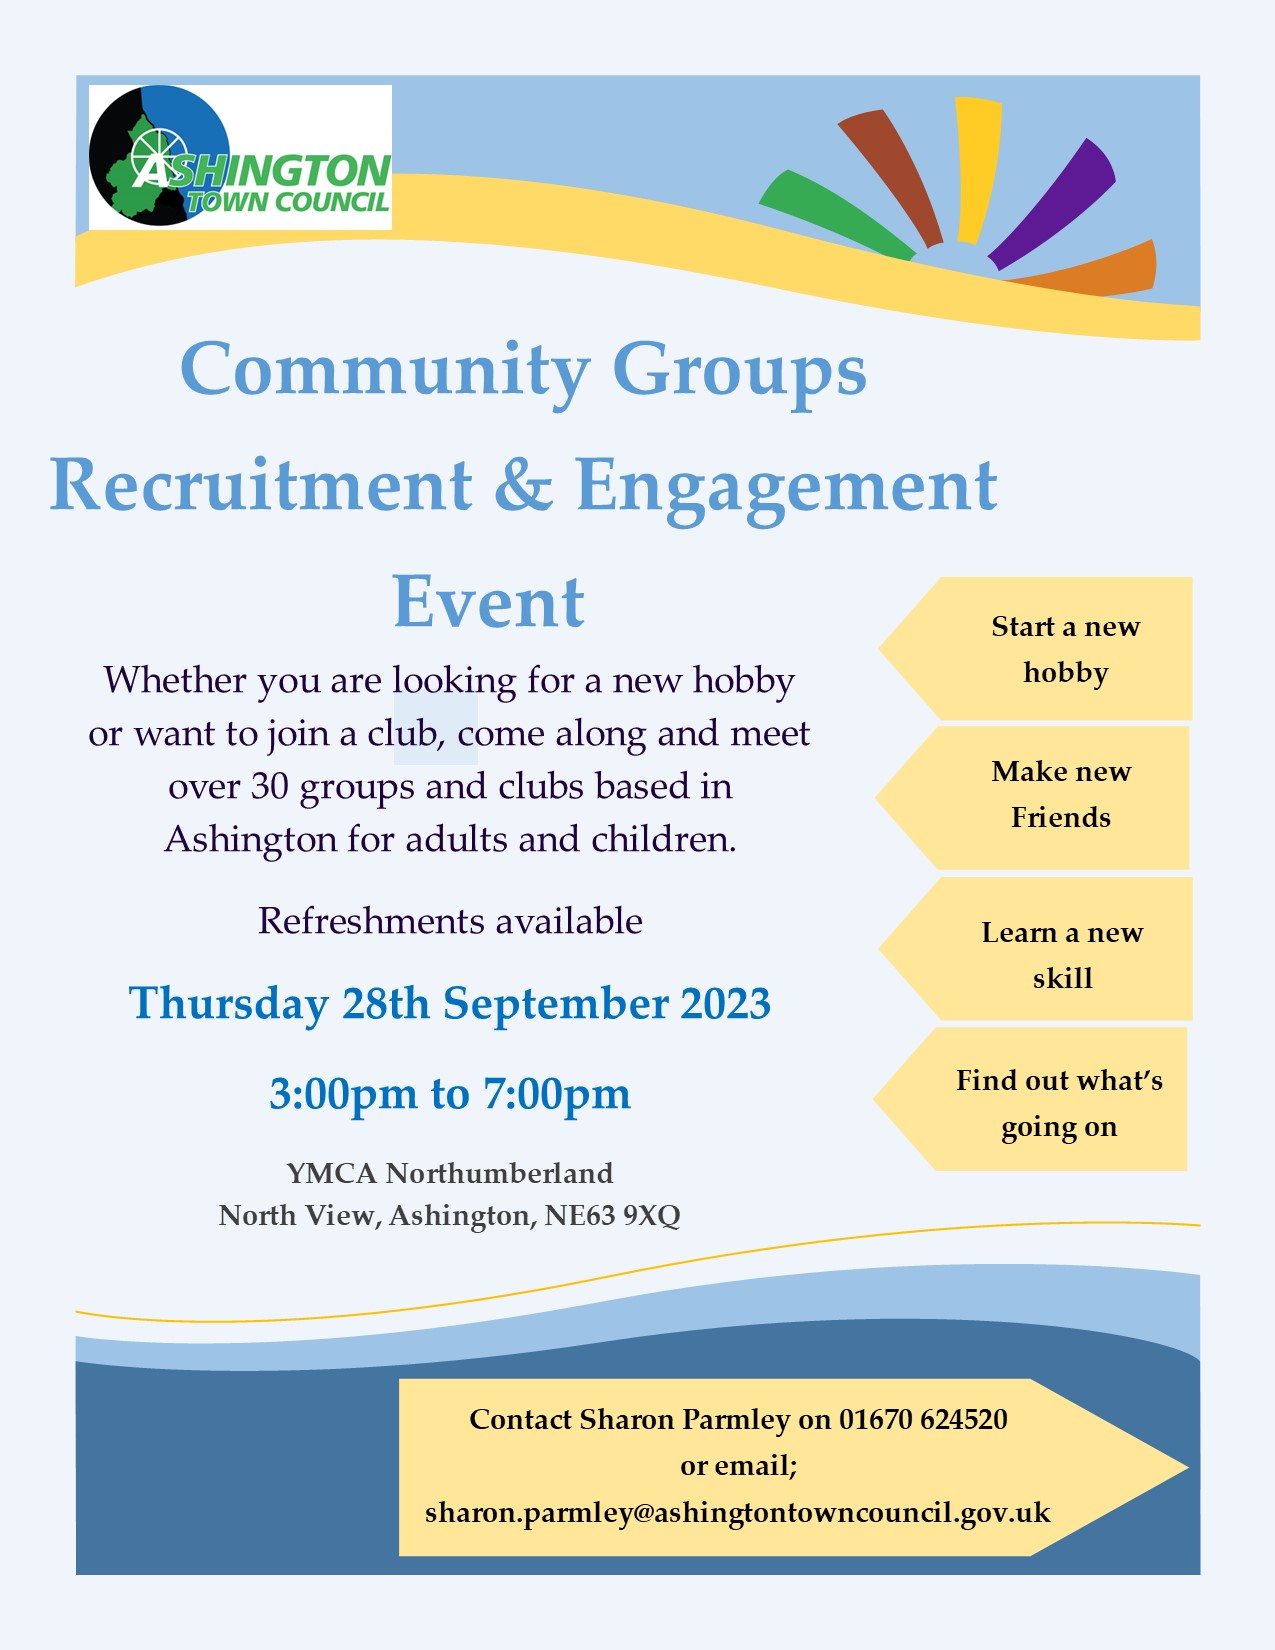 Community Groups Recruitment & Engagement Event